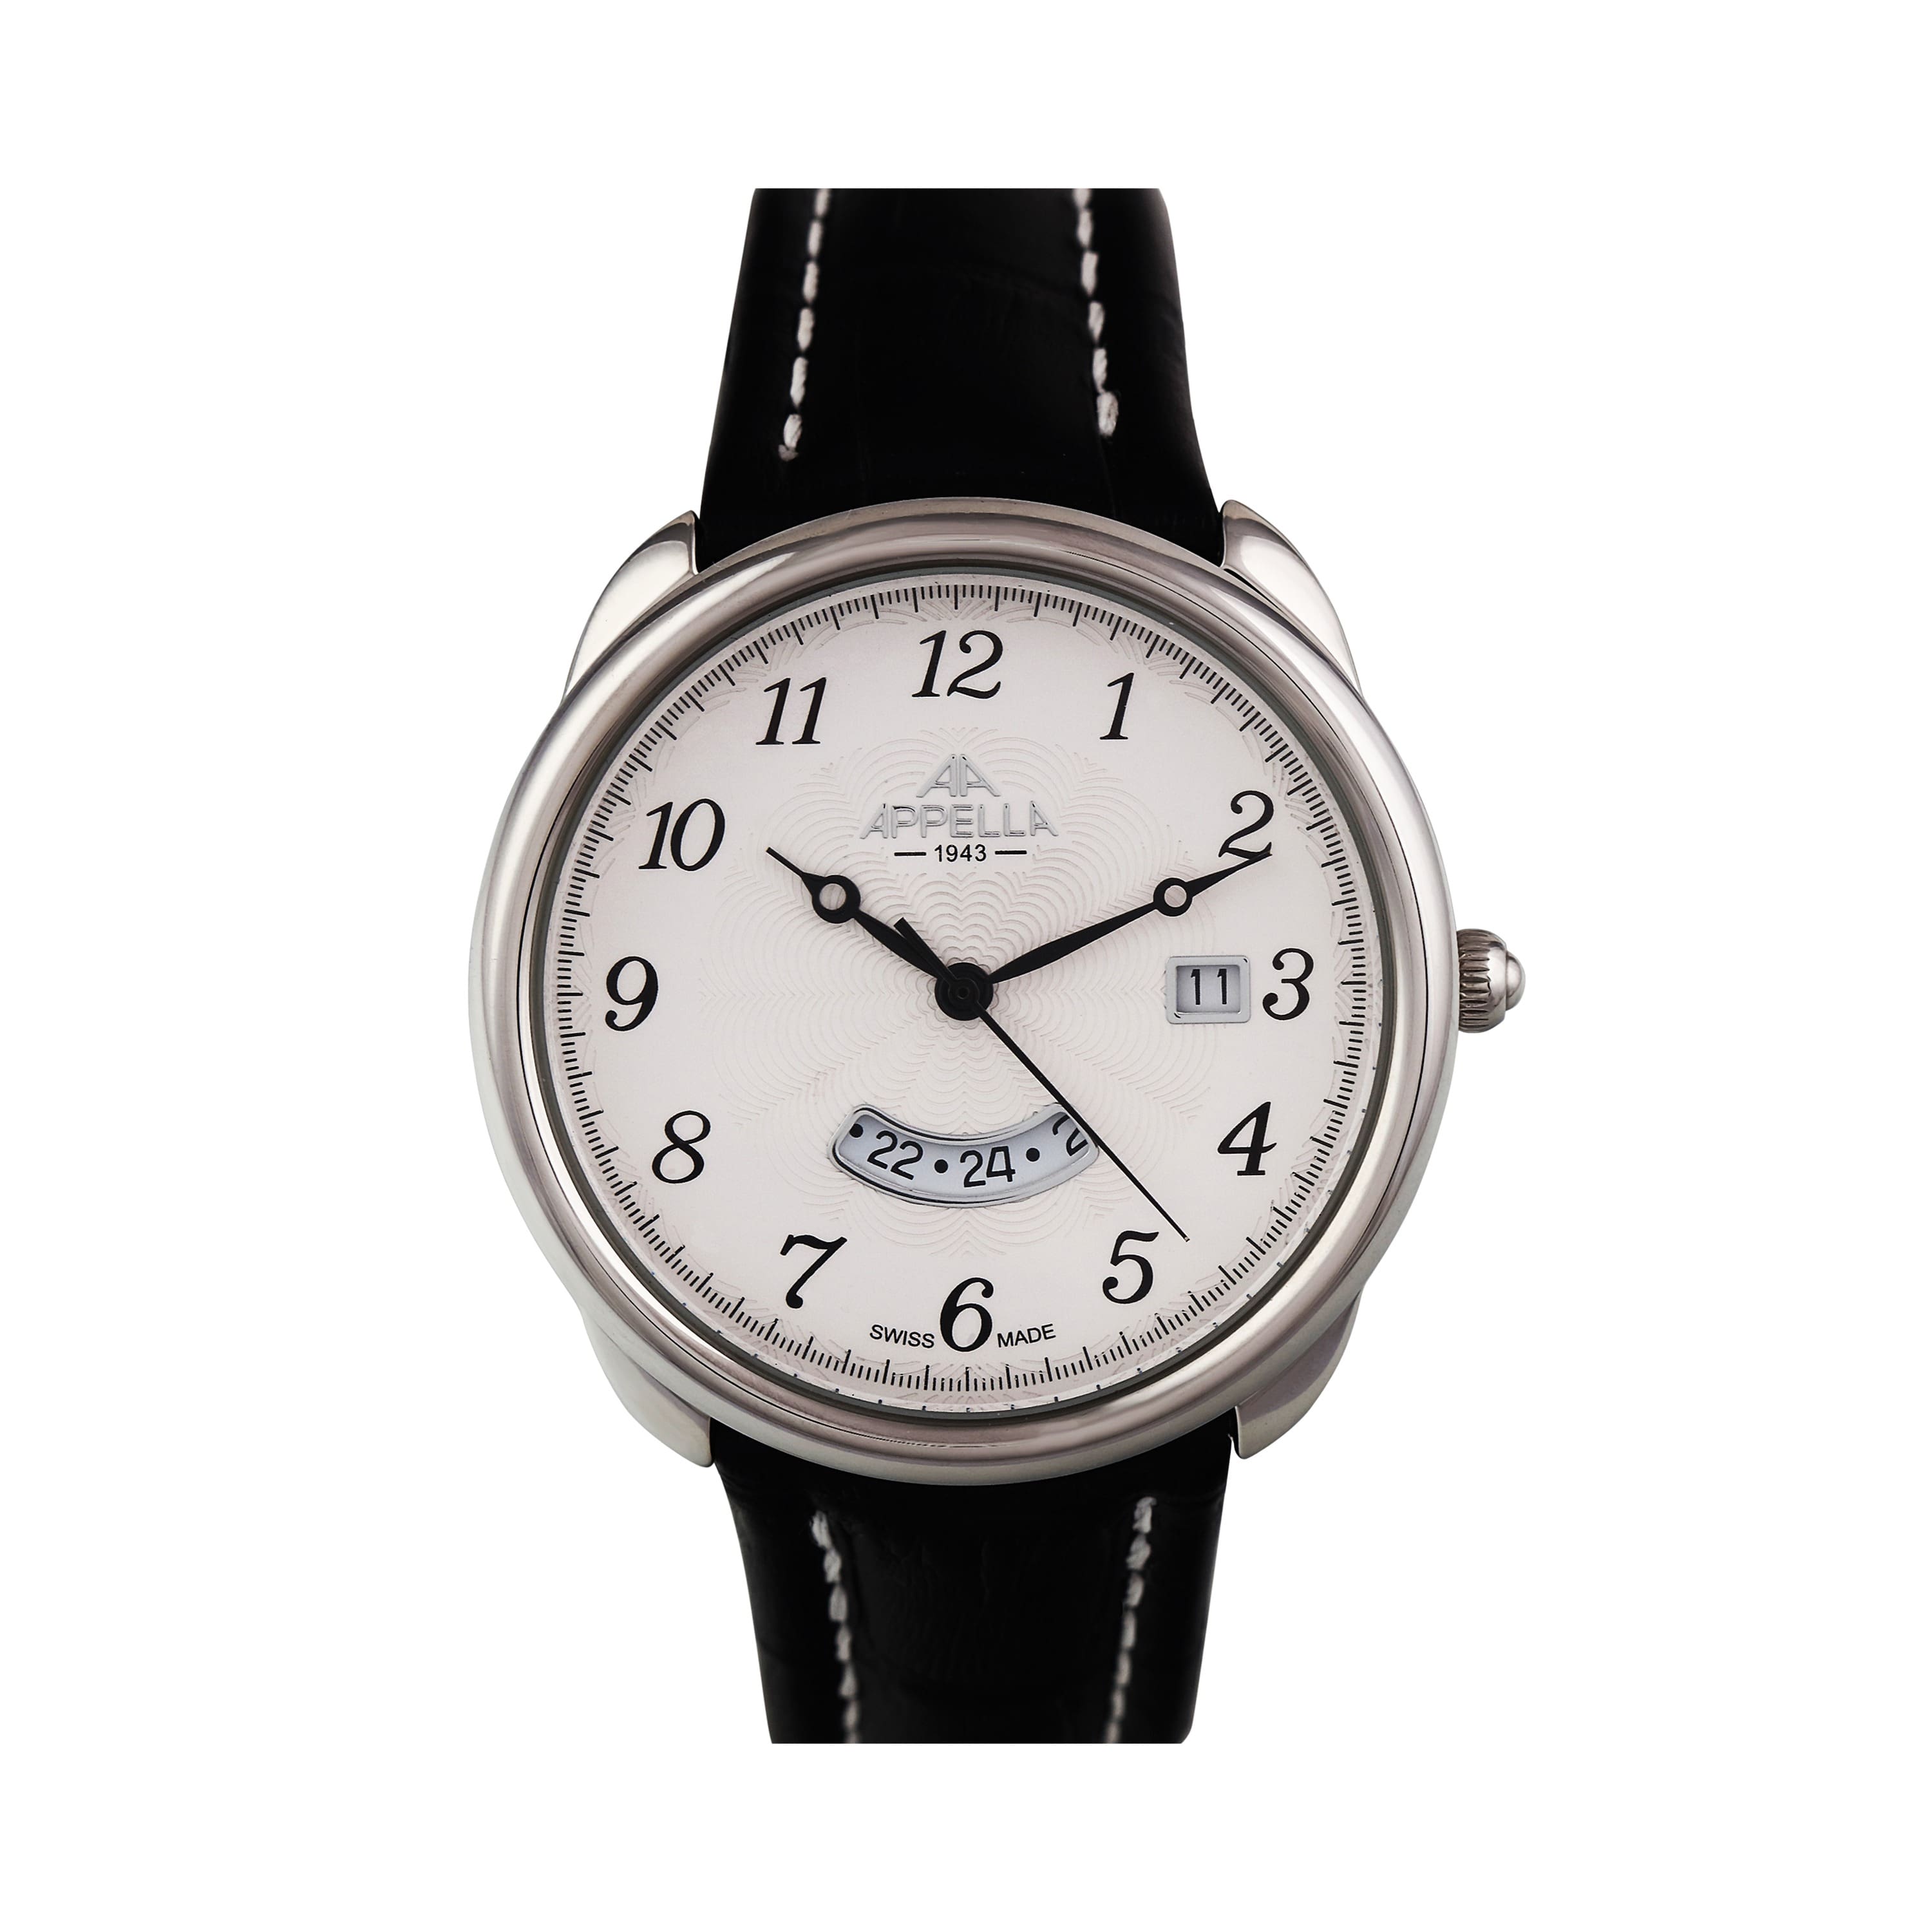 Appella L70007.5B33A - Automatic Watch • Watchard.com